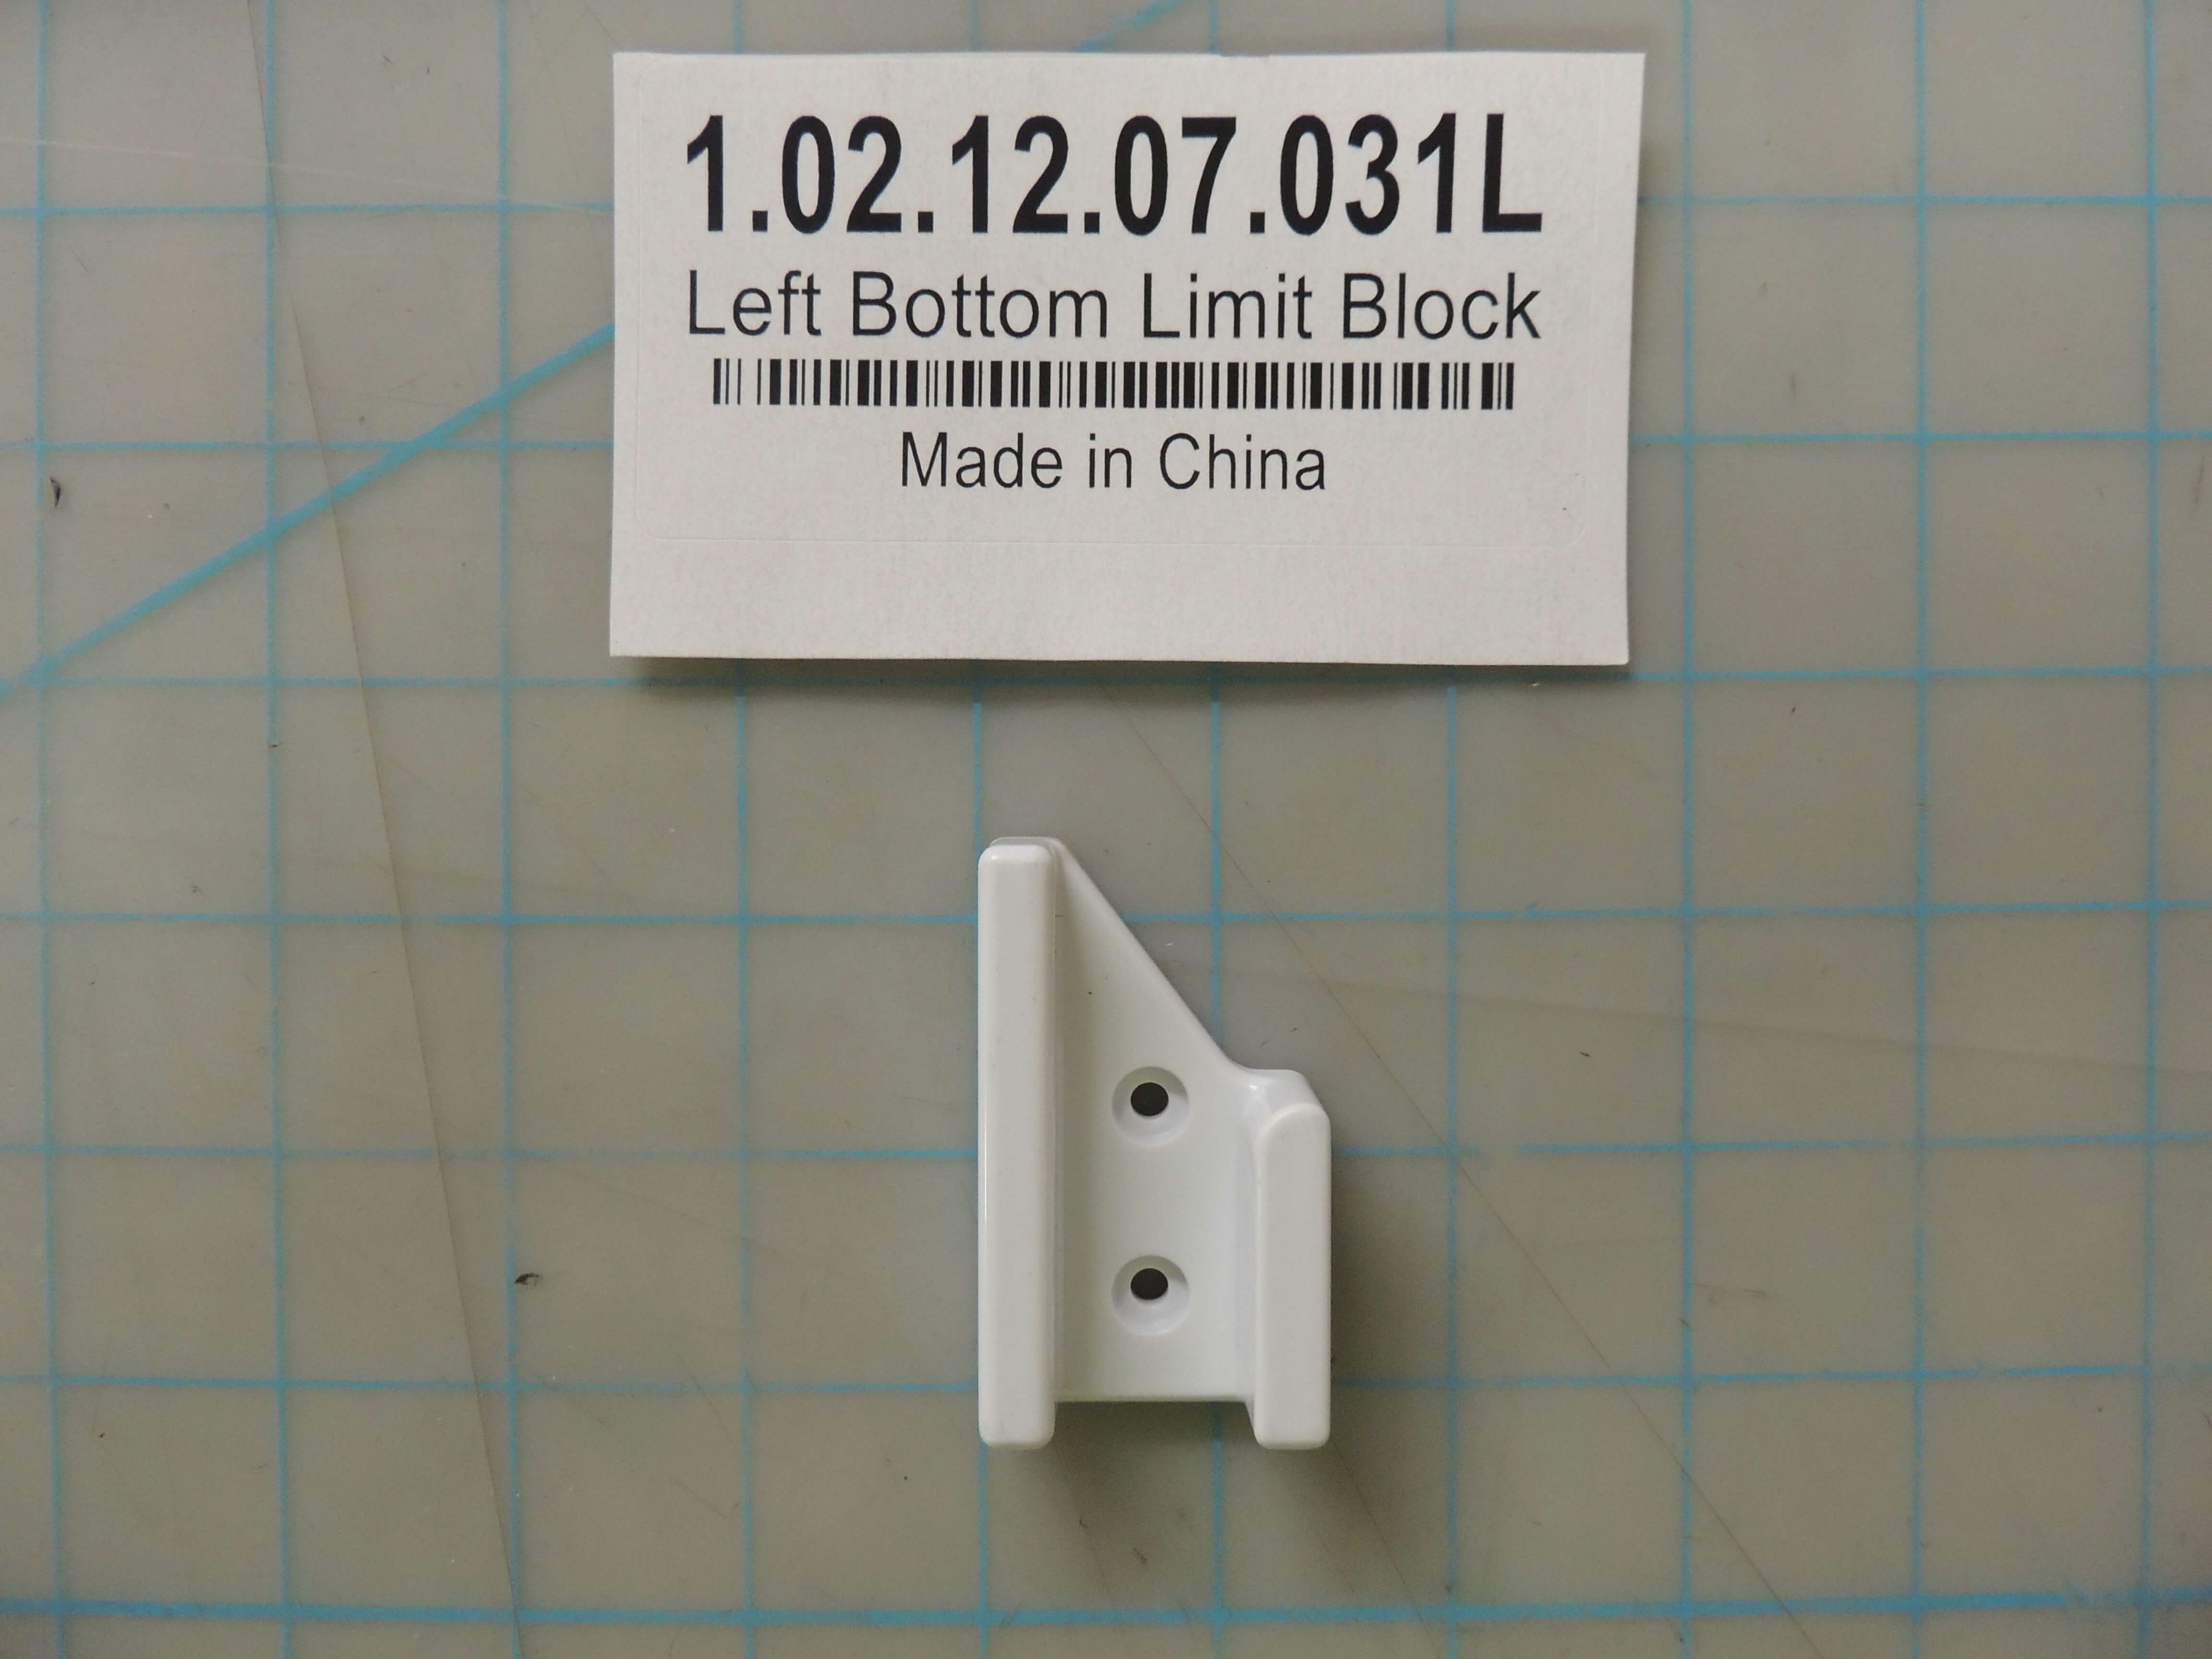 Left Bottom Limit Block